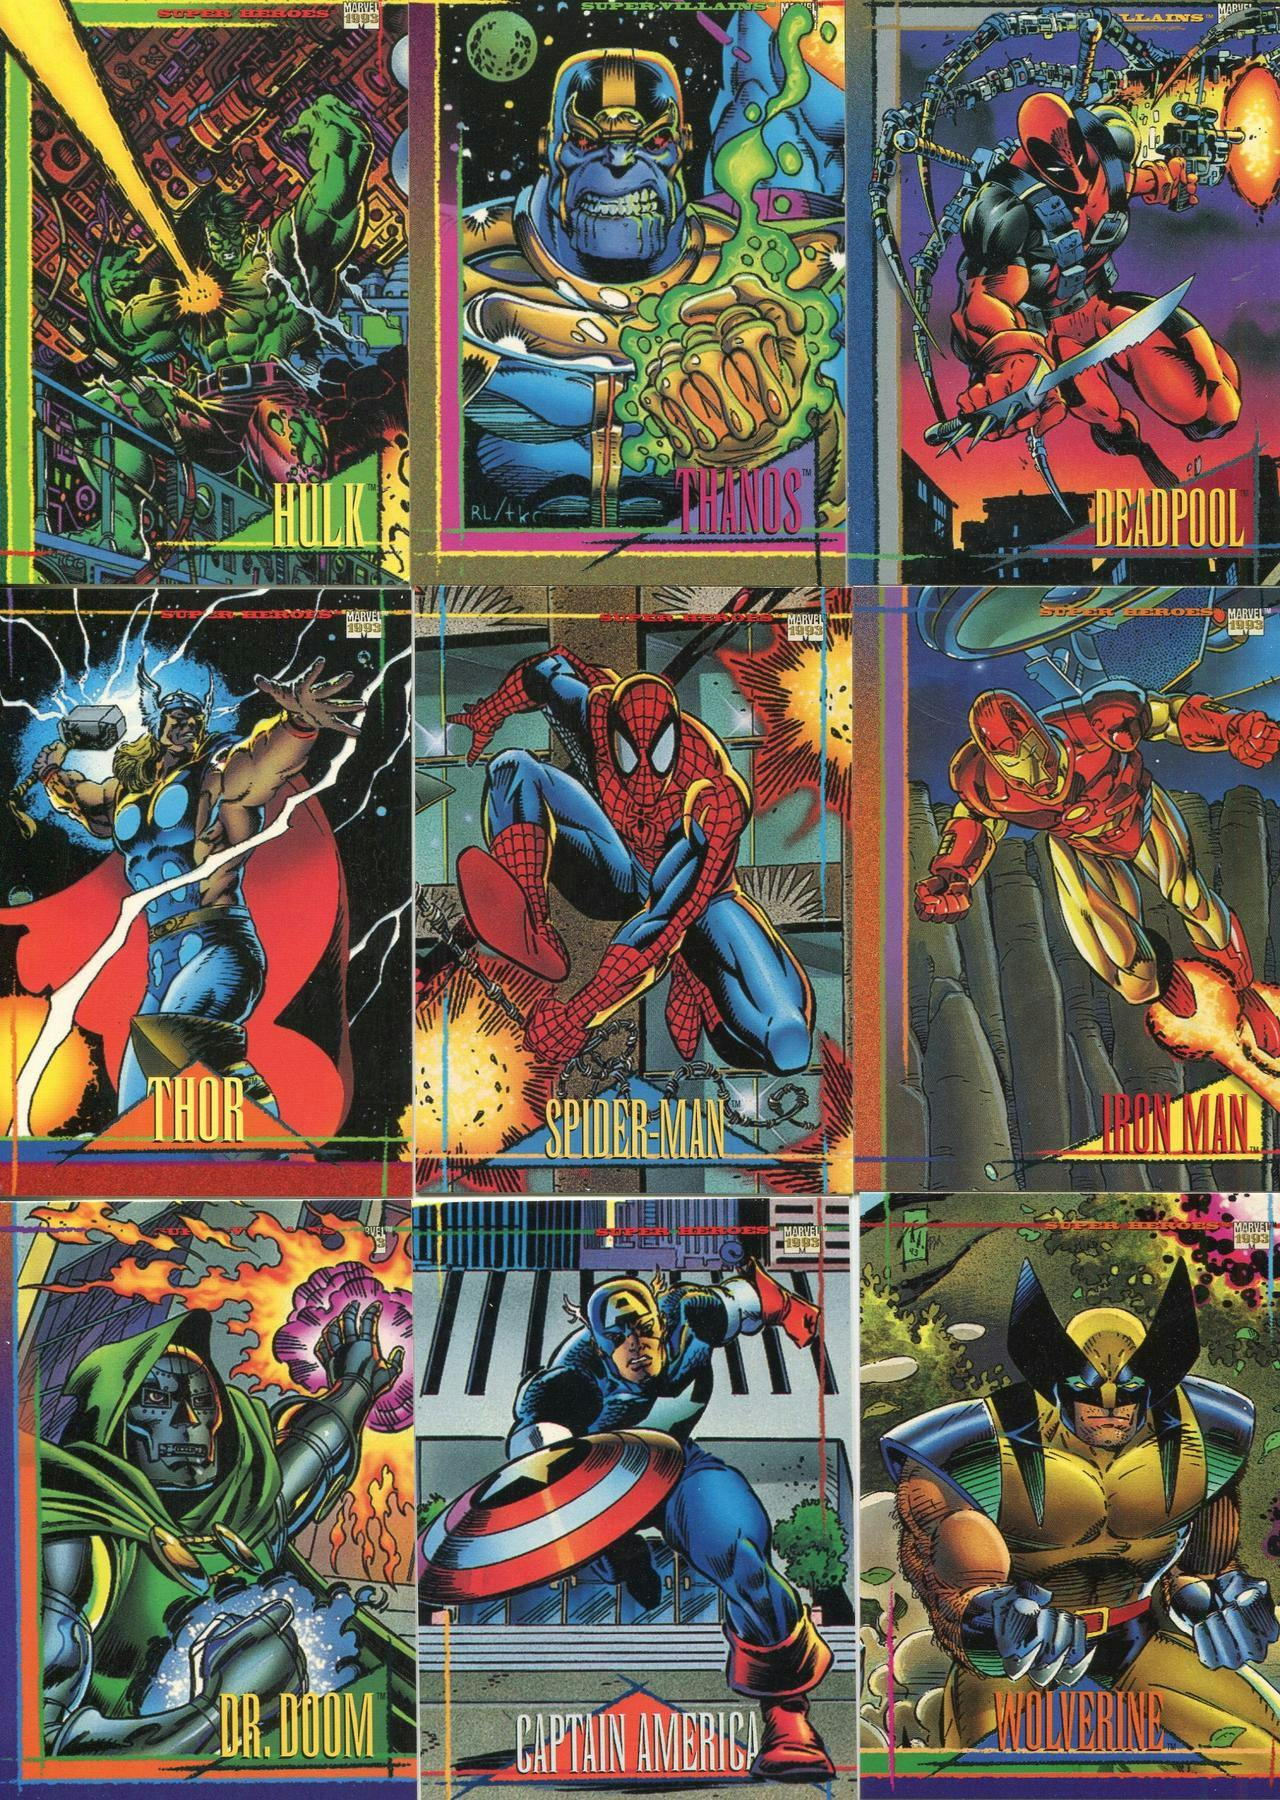 Skybox 1993 Marvel Universe Series 1 Complete 180 Card Set